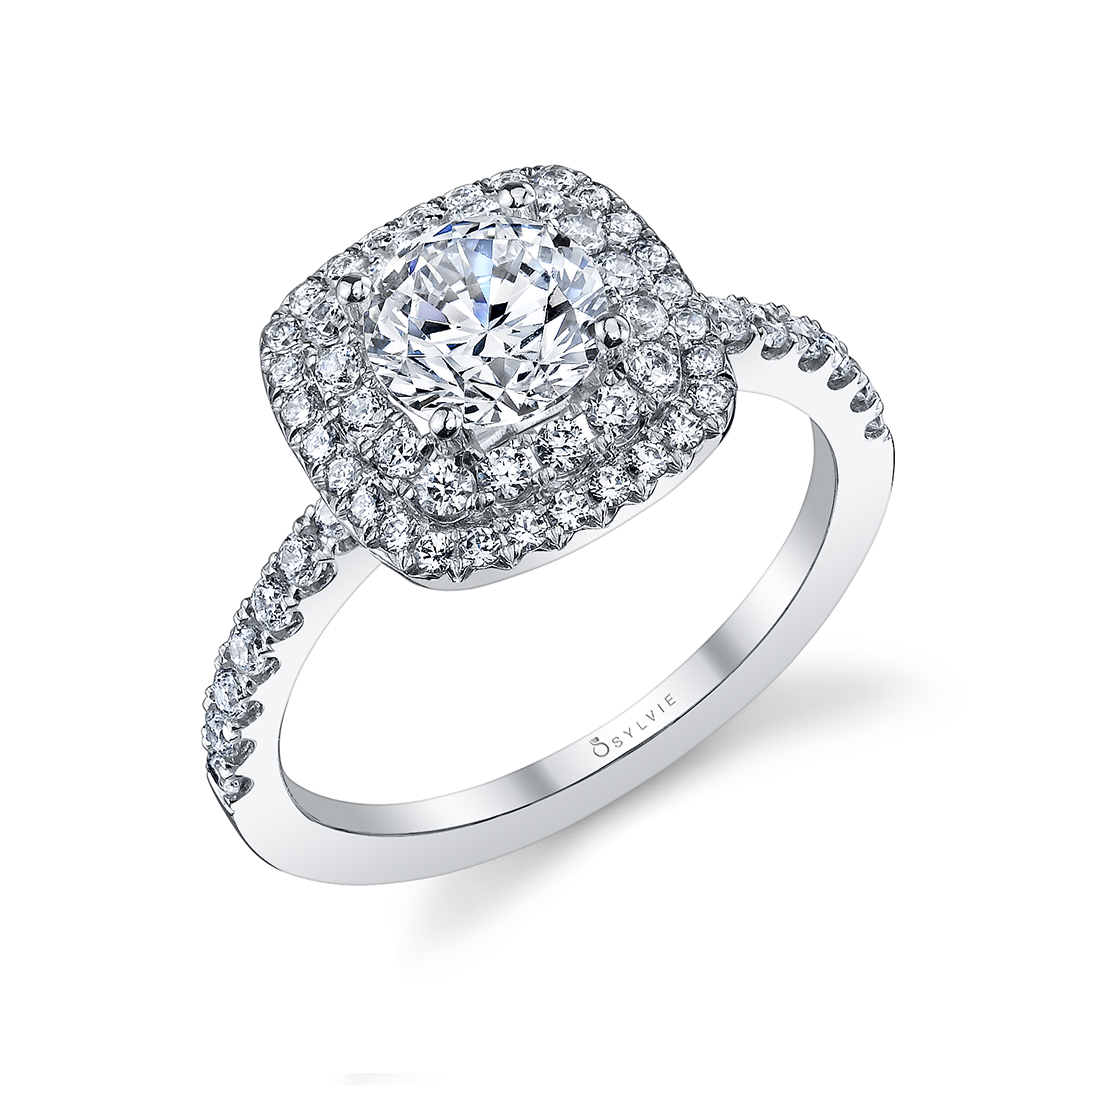 Double Halo Engagement Ring%E2%80%93S1097%E2%80%93WG Sylvie 1